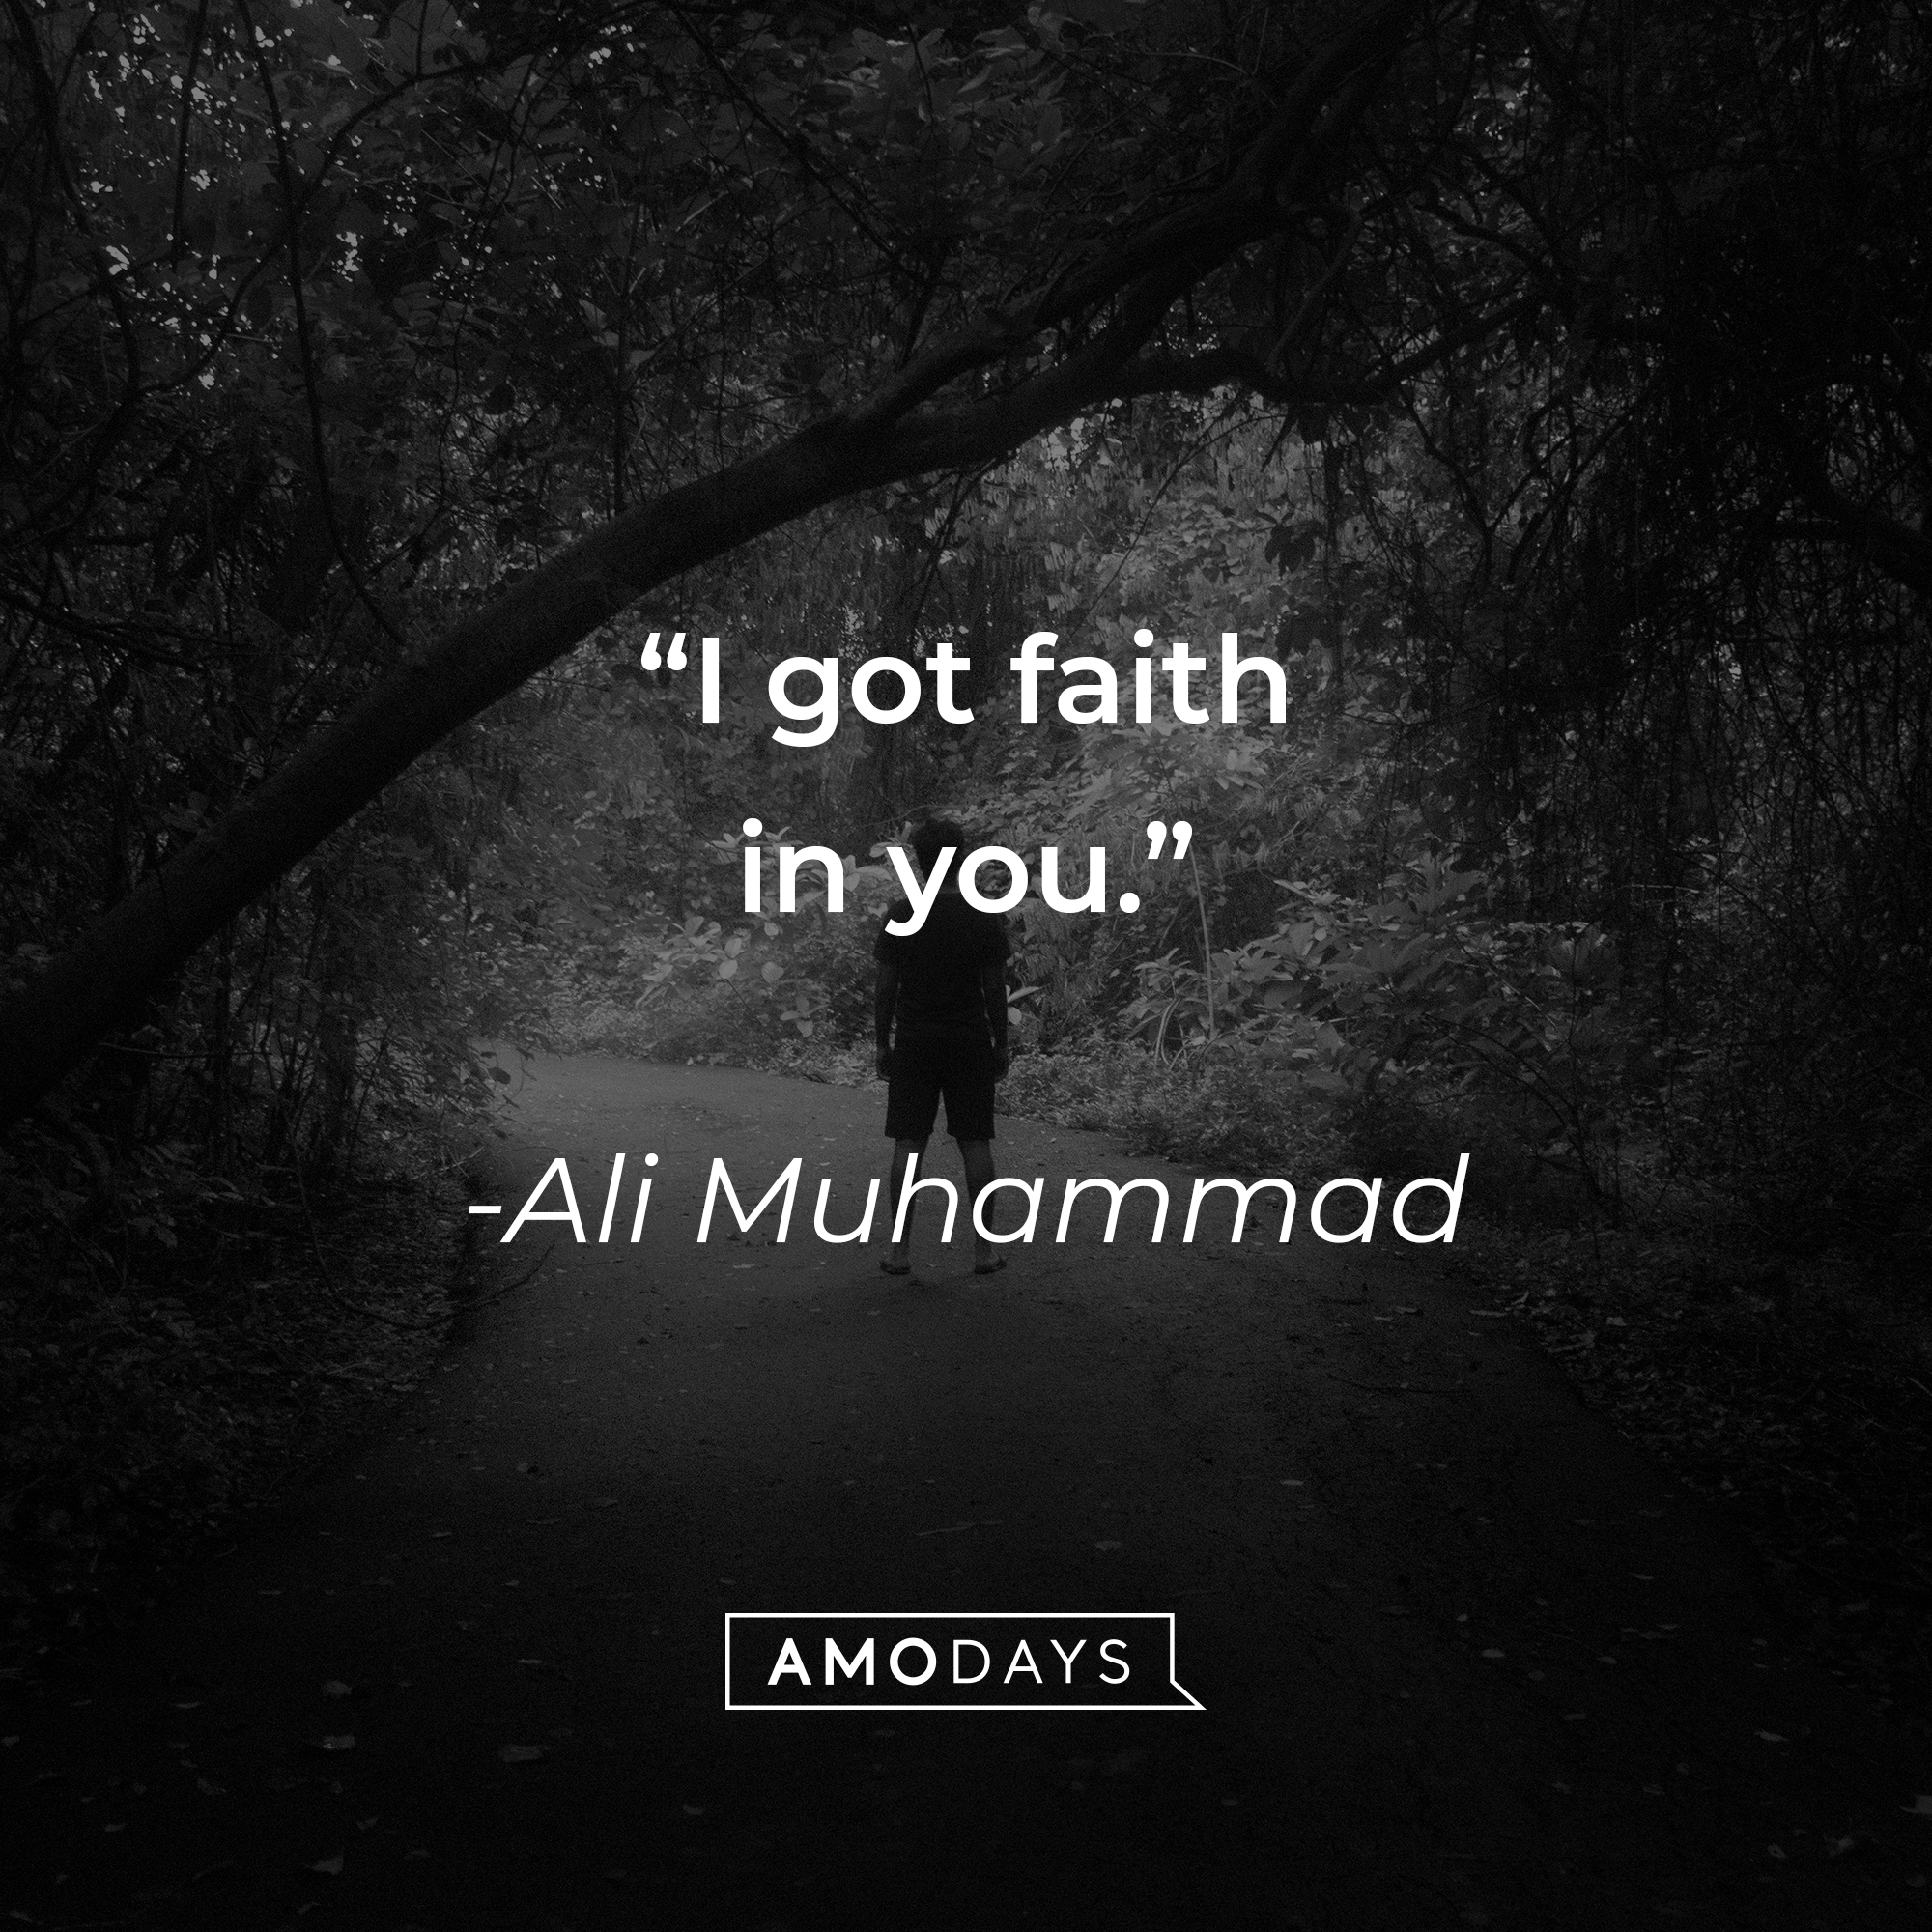 Ali Muhammad's quote: "I got faith in you." | Source: unsplash.com